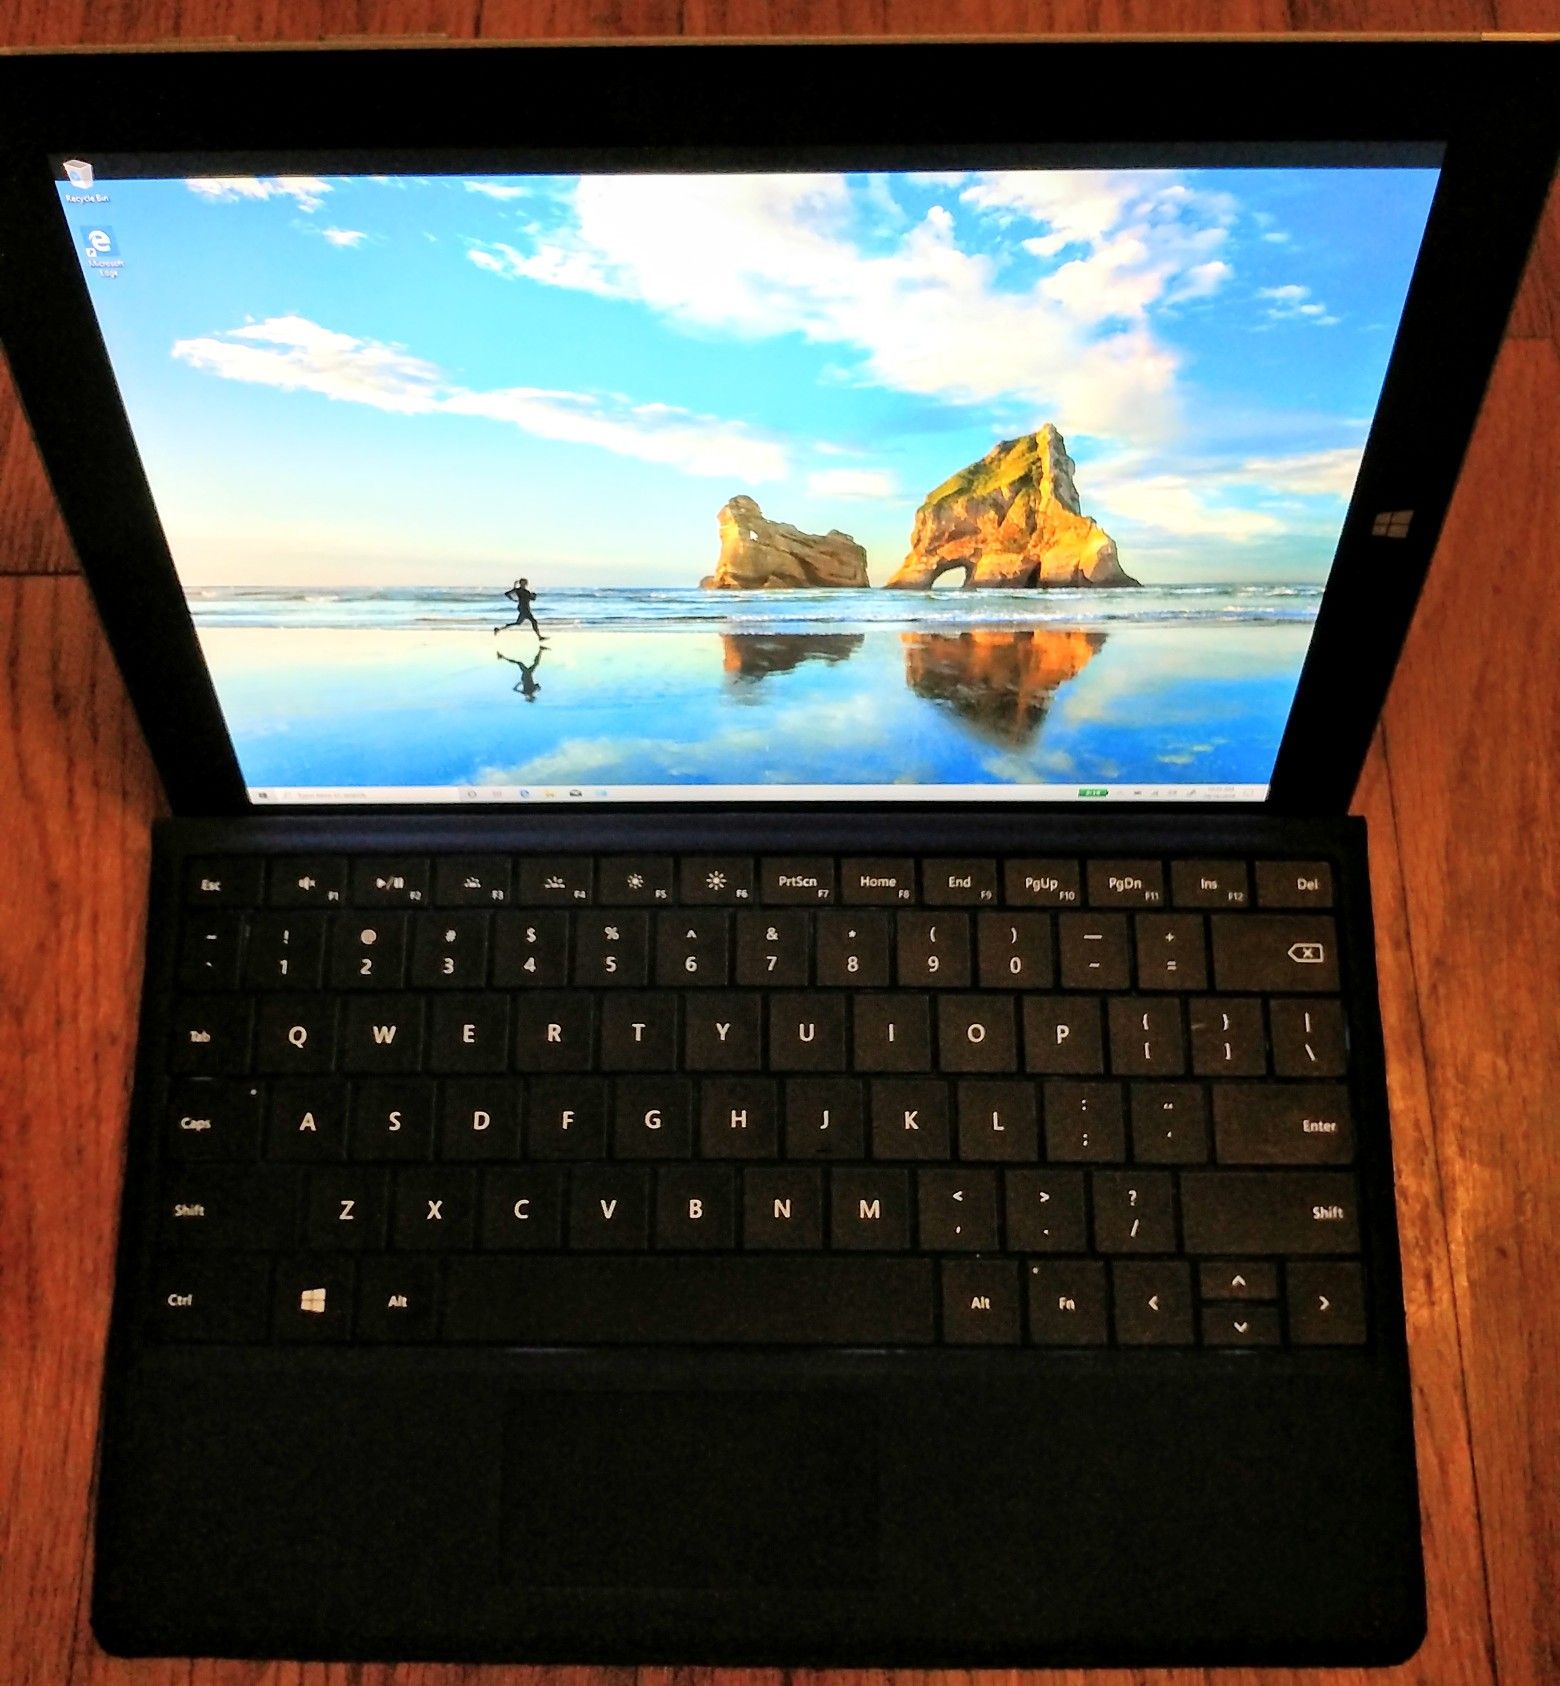 Microsoft Surface 3 Touchscreen Laptop Intel Quad Core 64 GB SSD Webcam HDMI Wi-Fi Bluetooth Windows 10